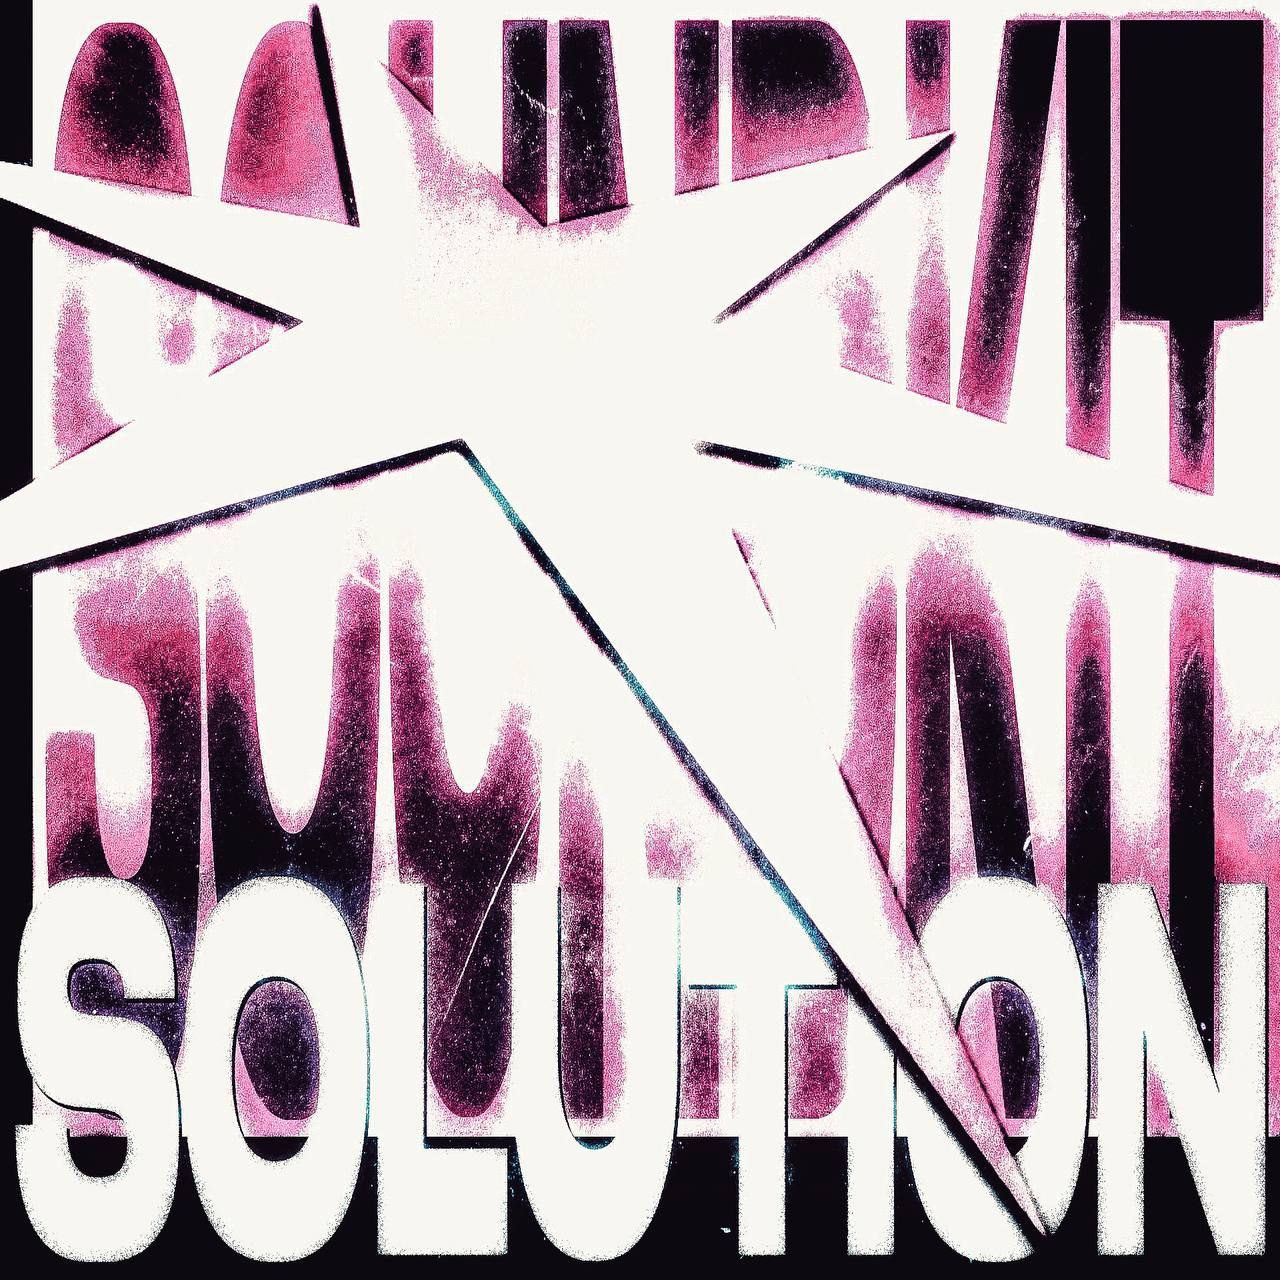 Curlygotcha - Solution (Sound Kit) Free Download